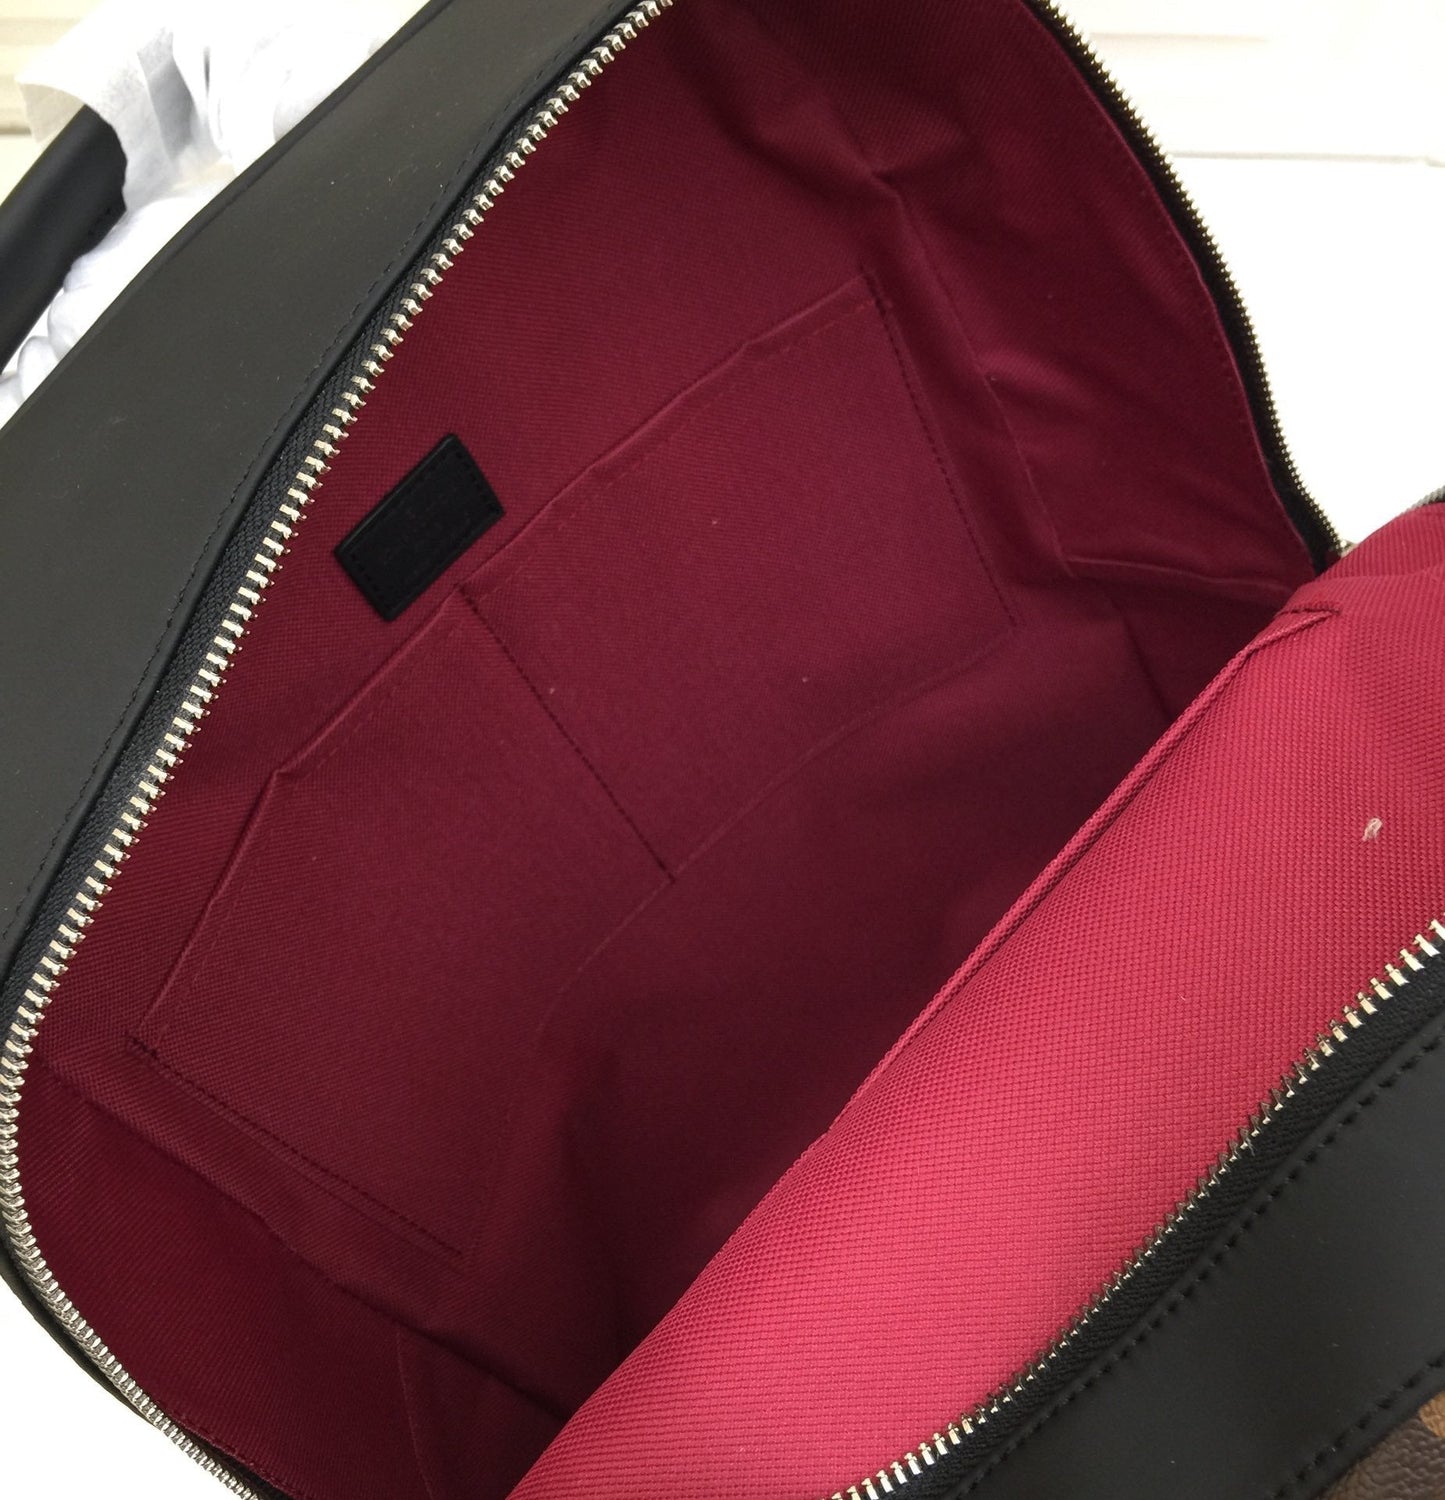 BL - High Quality Bags LUV 285